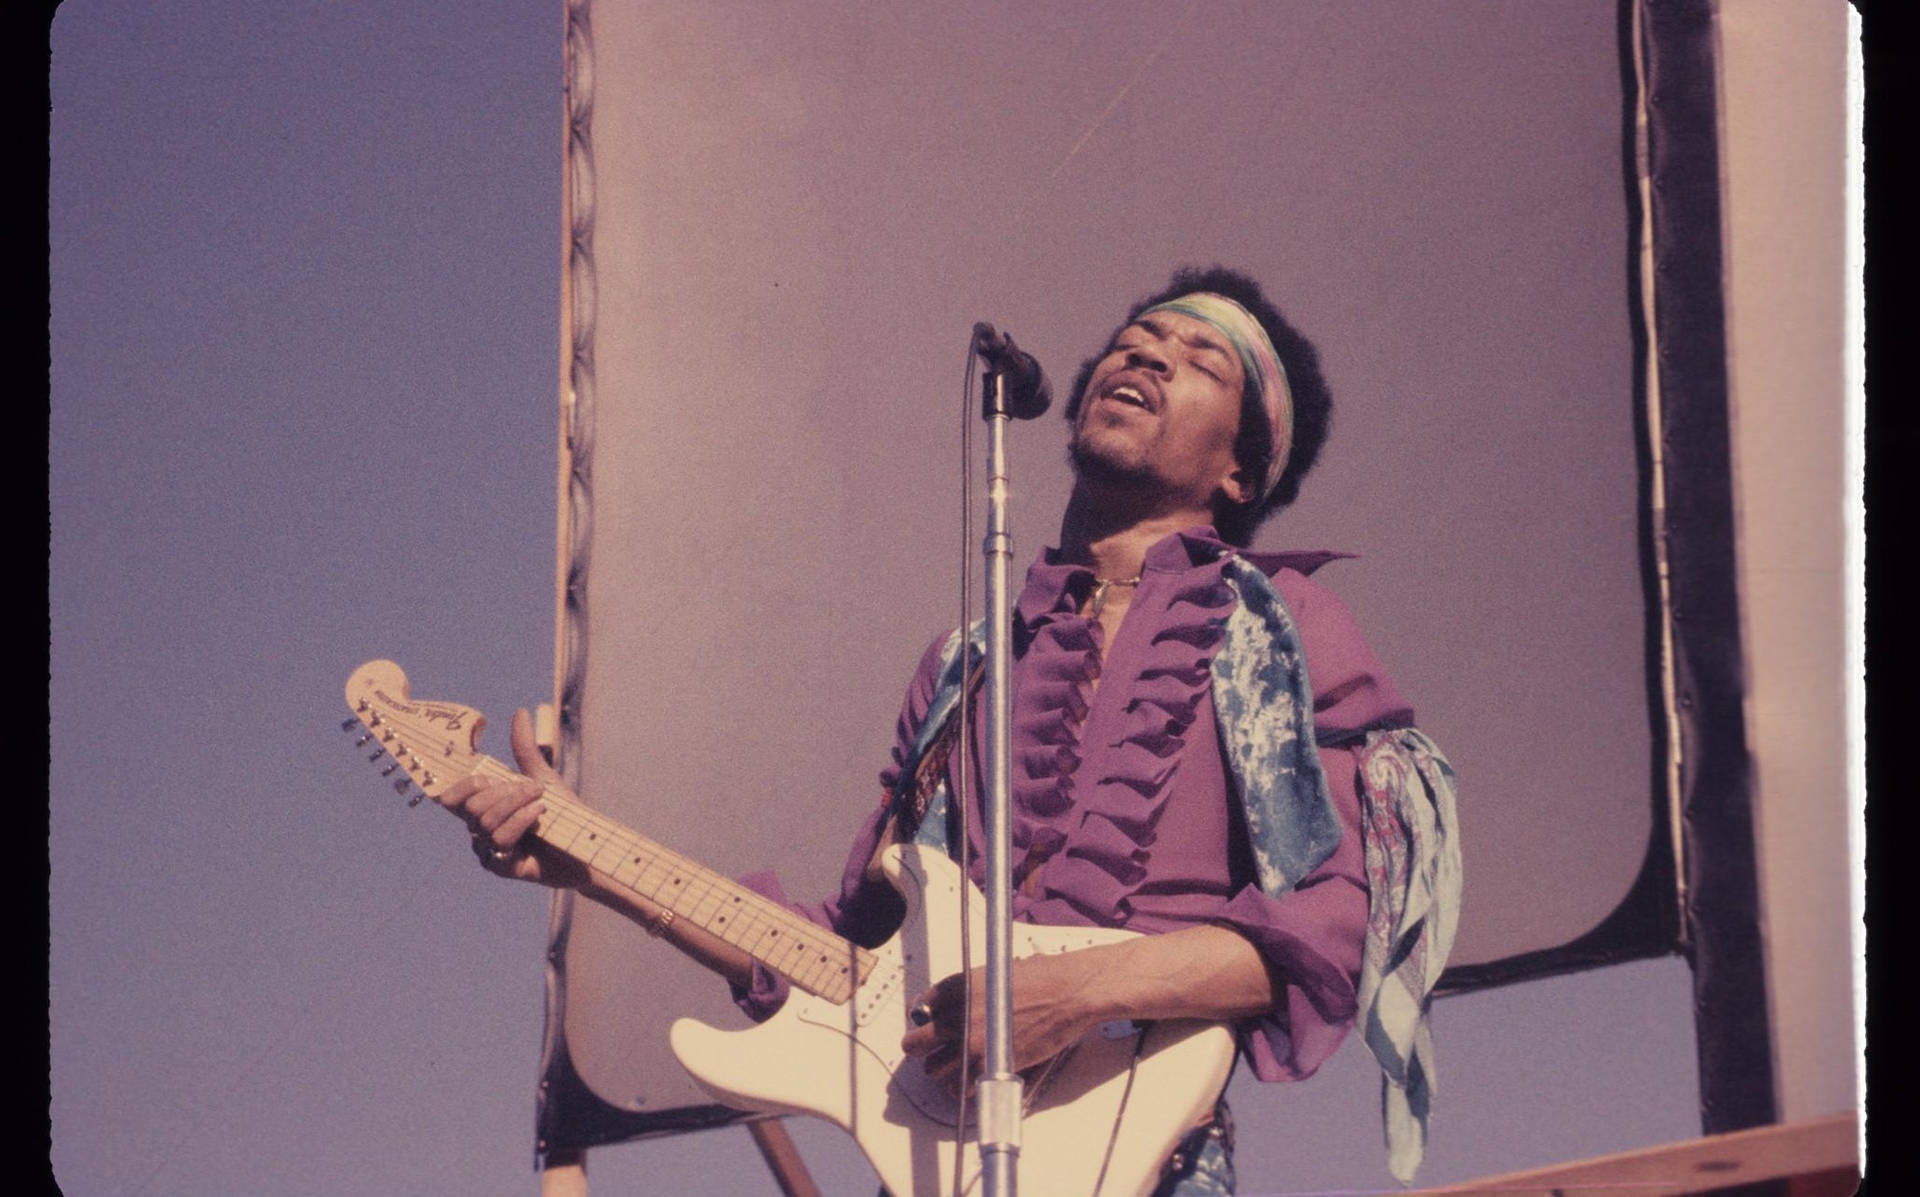 Jimi Hendrix In Violet Chiffon Top Wallpaper